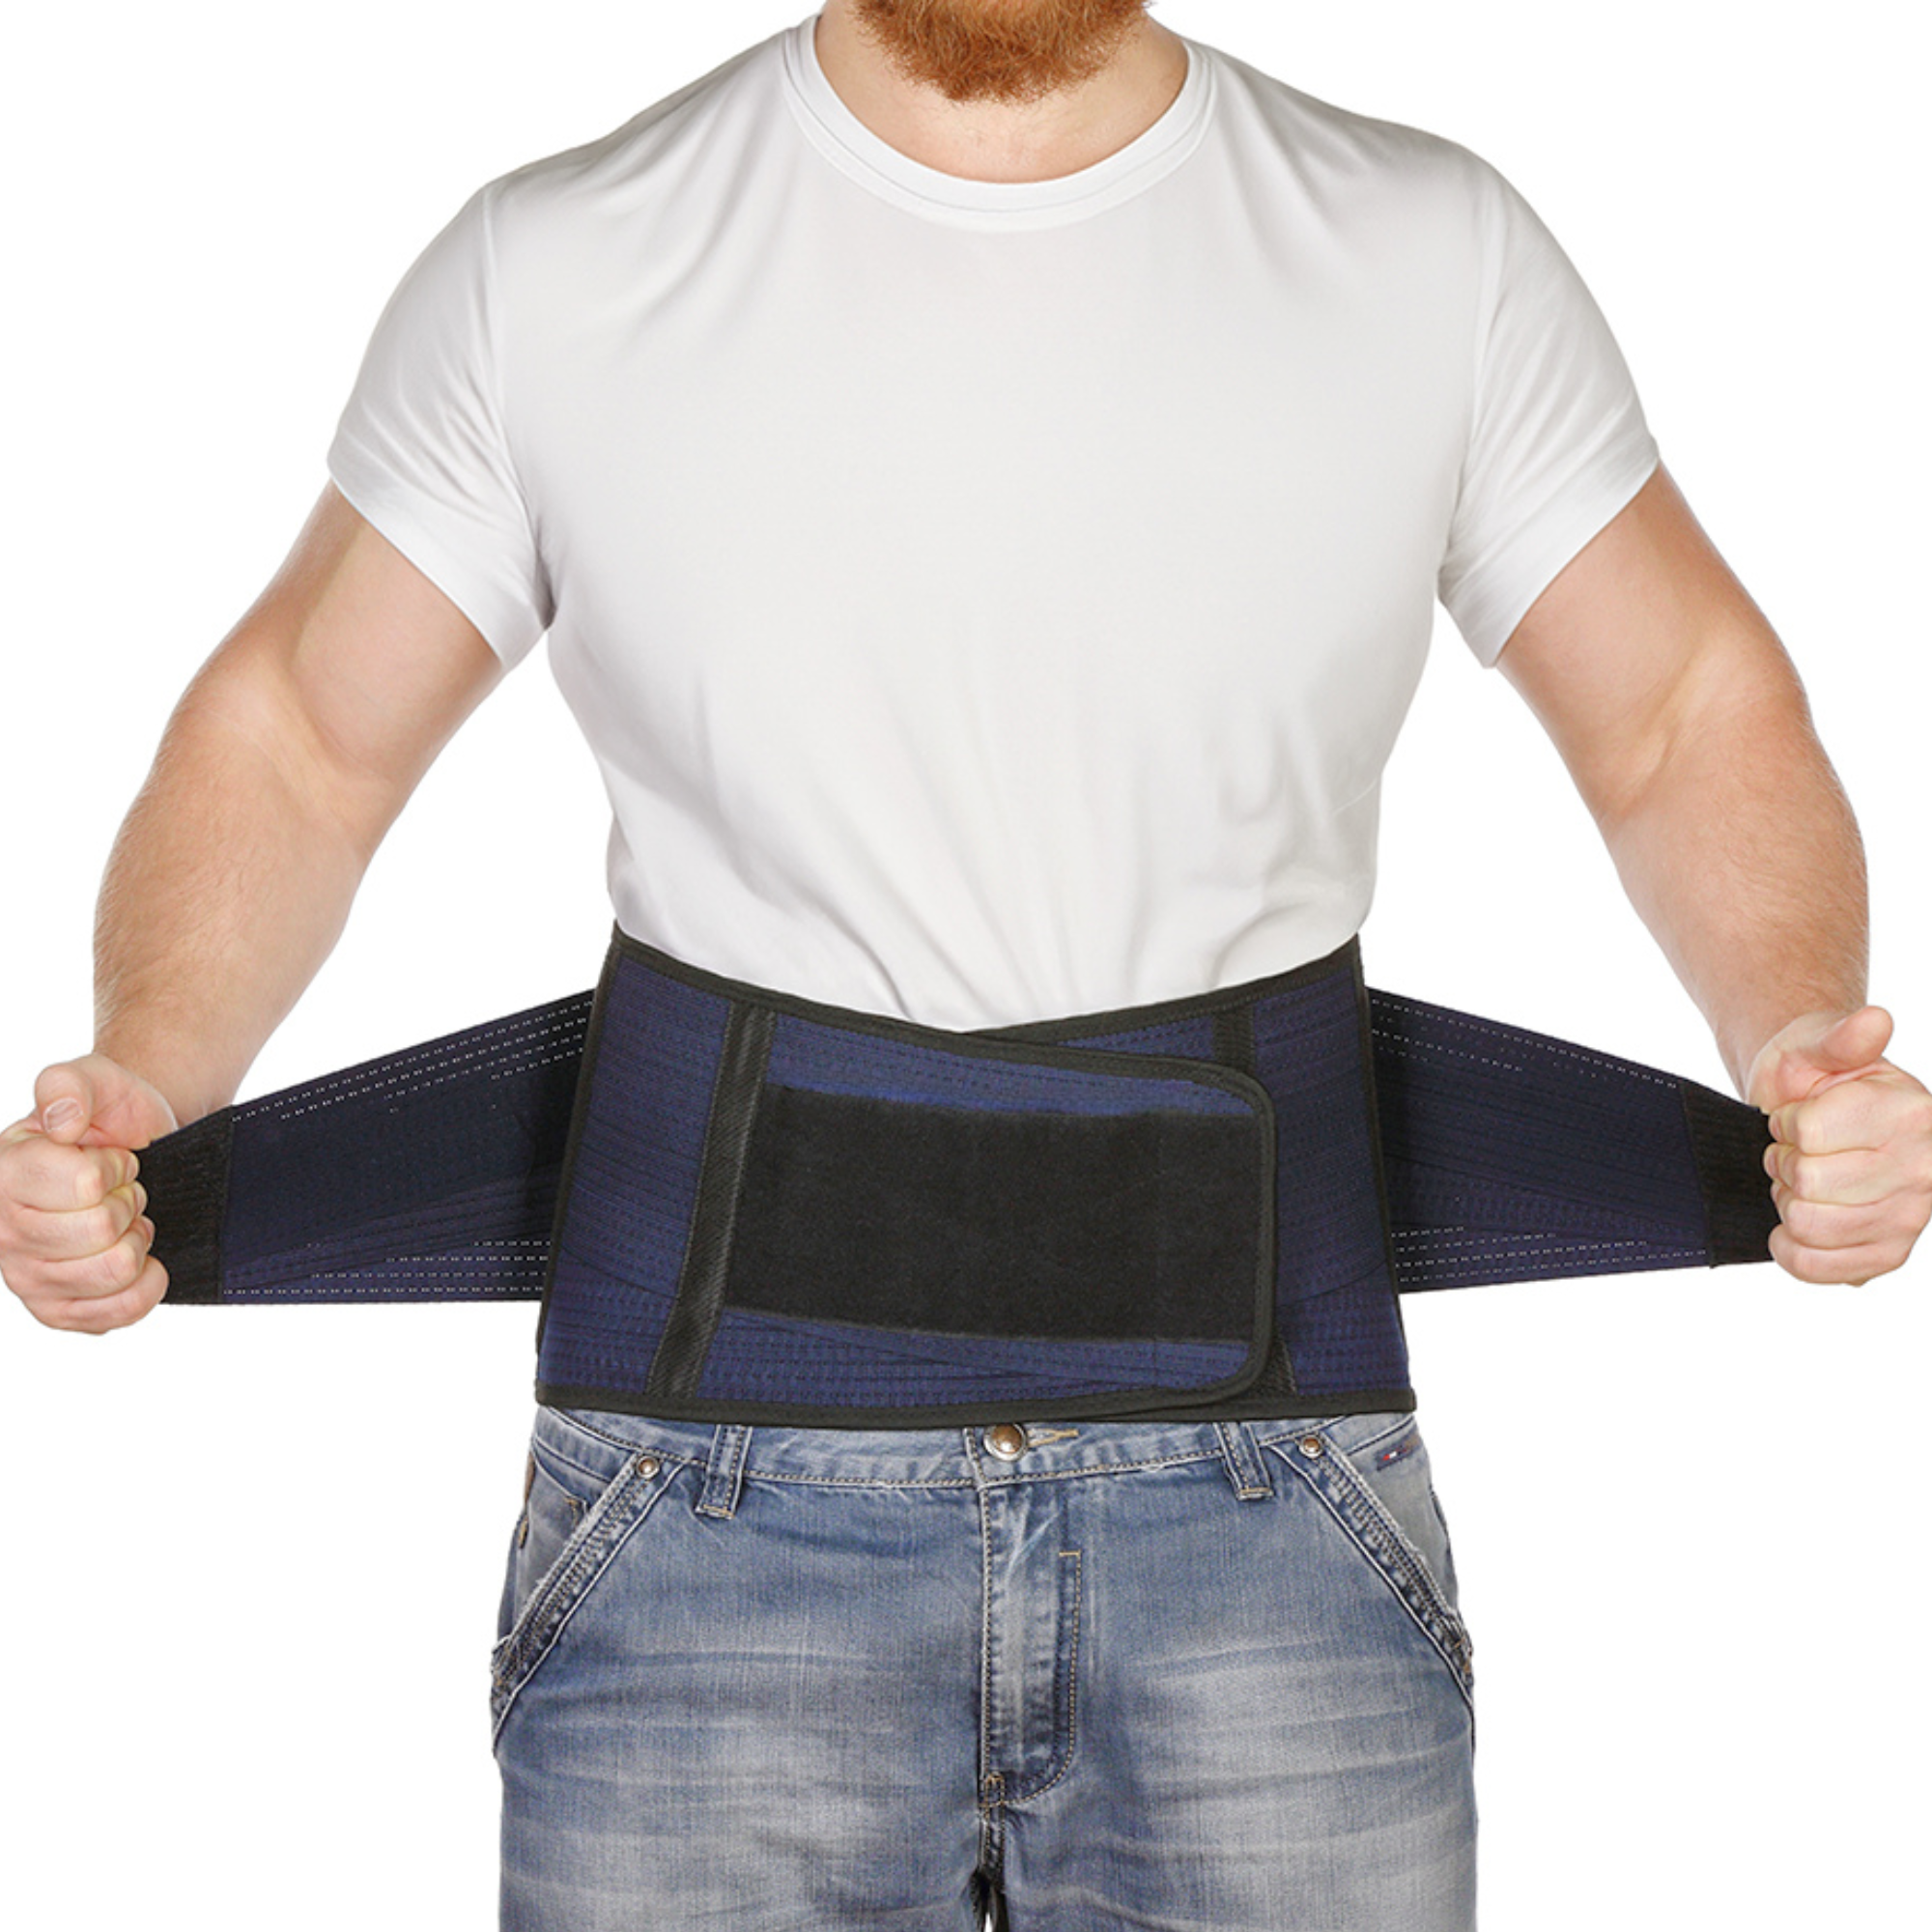 lumbar back brace for lower back pain by aveston